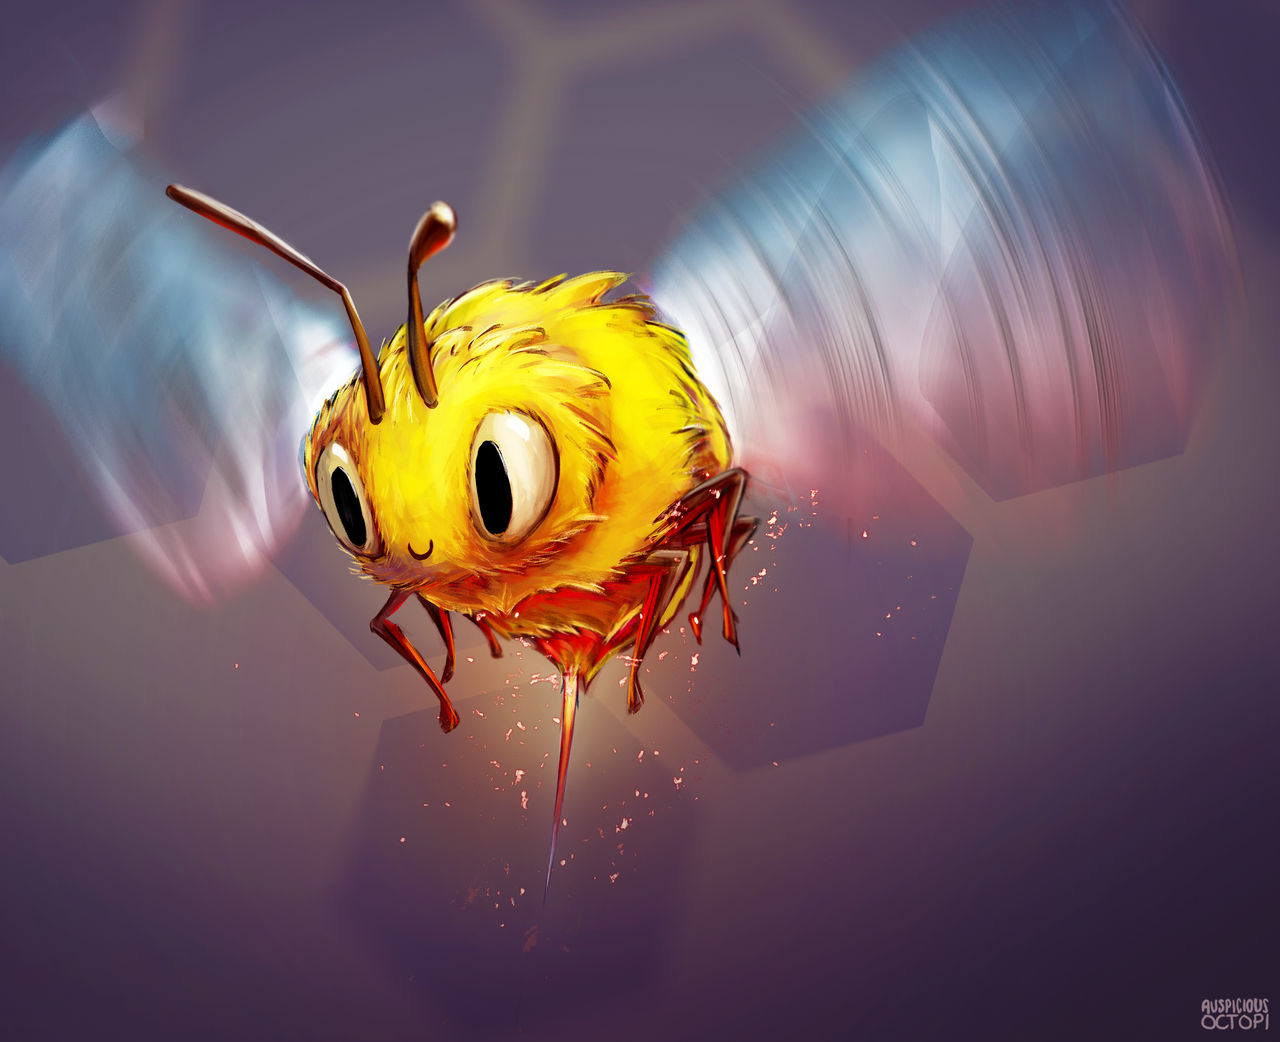 Buzz buzz by auspiciousoctopi.jpg